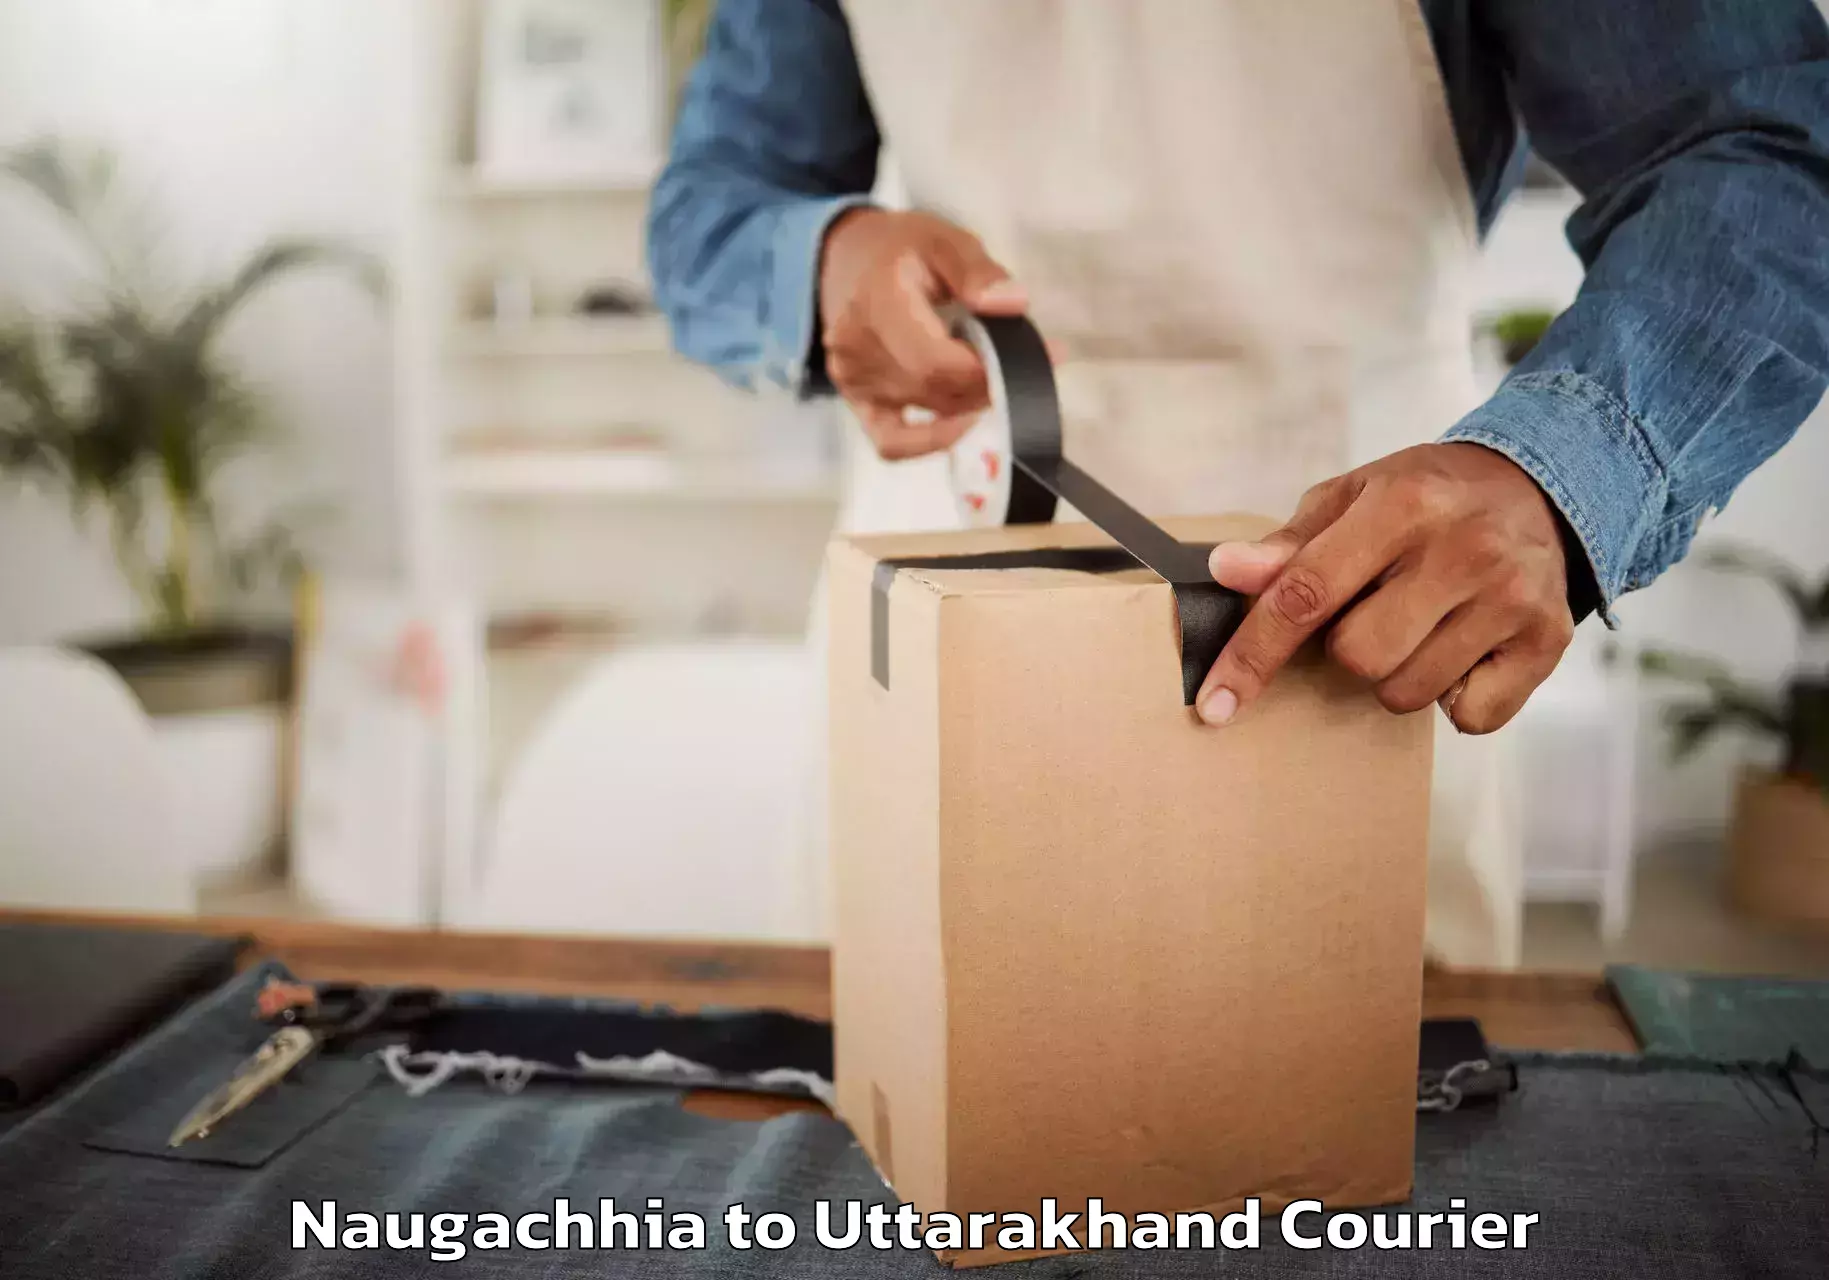 Furniture delivery service Naugachhia to Dehradun